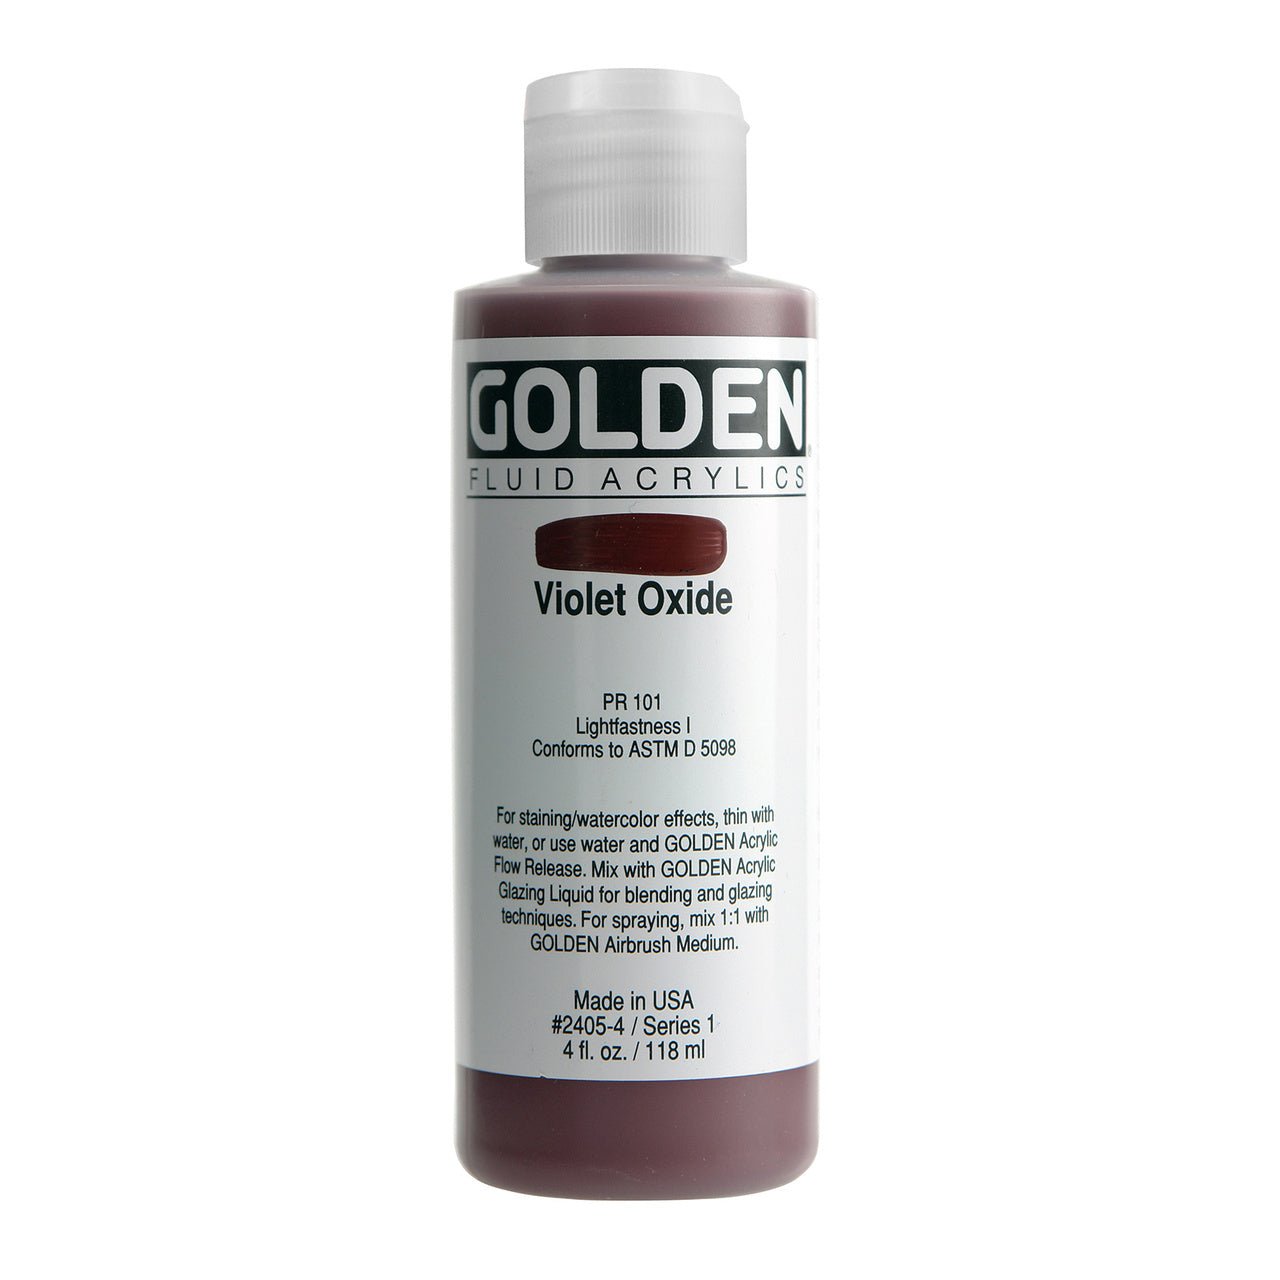 Golden Fluid Acrylic Violet Oxide 4 oz - merriartist.com